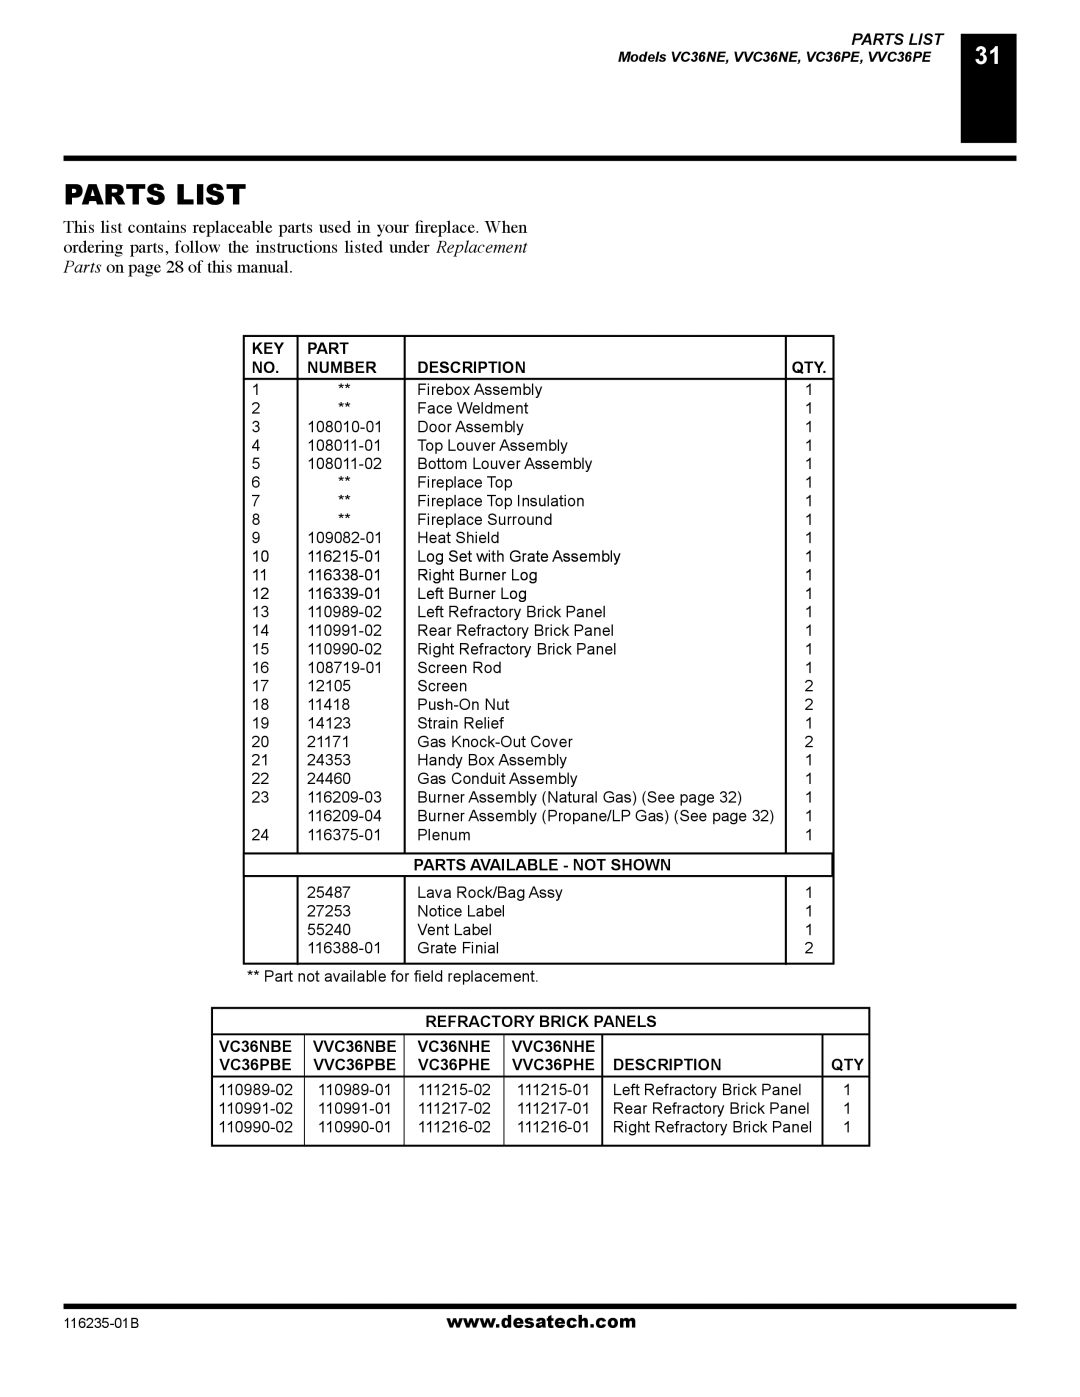 Desa (V)VC36NE Series, (V)VC36PE Series installation manual Parts List, KEY Part Number Description QTY 